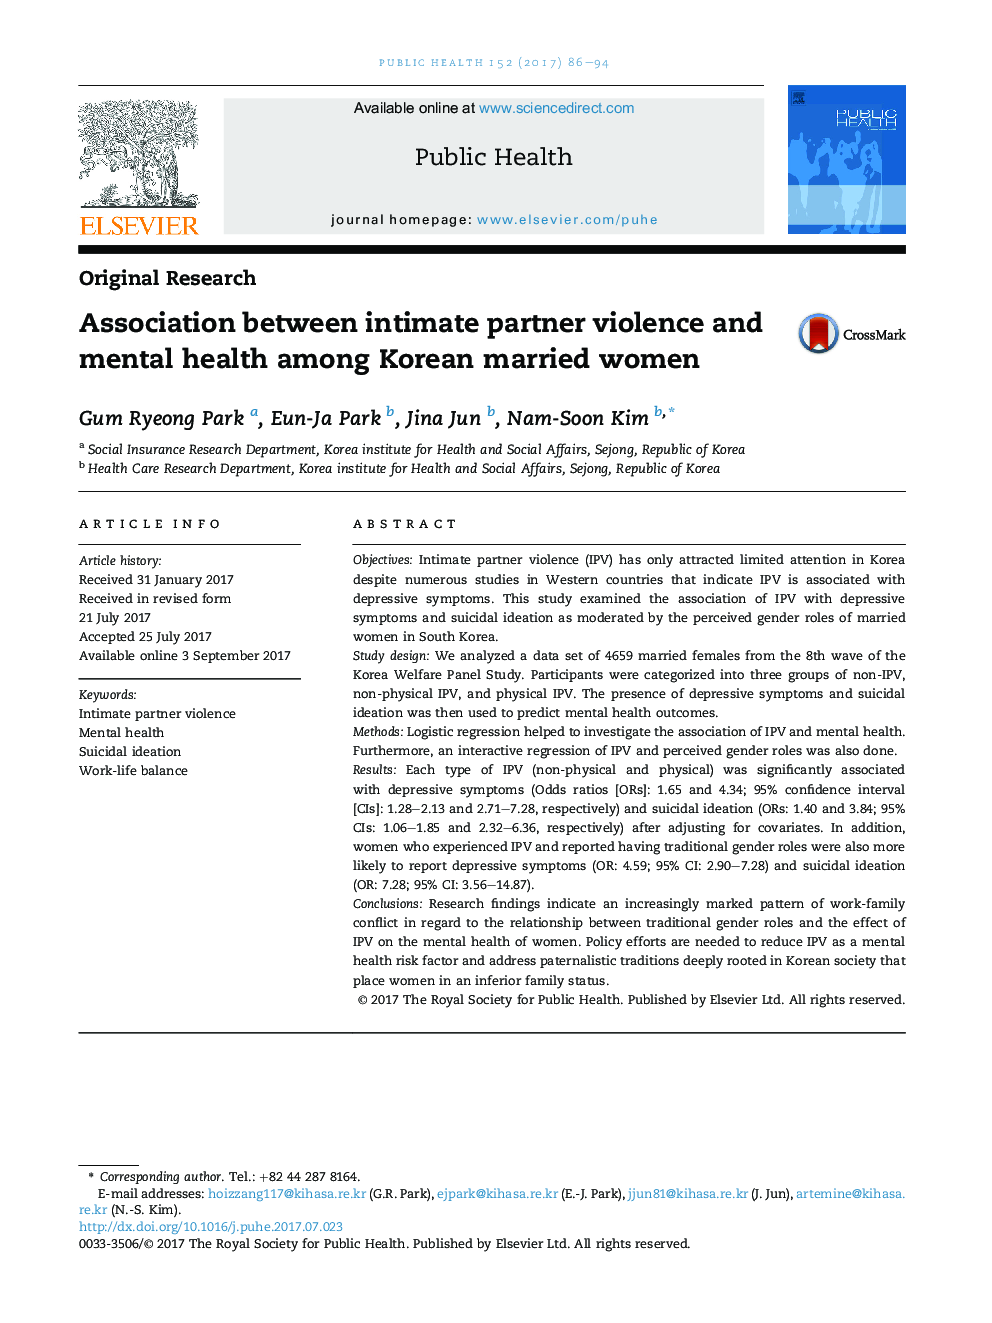 Association between intimate partner violence and mental health among Korean married women